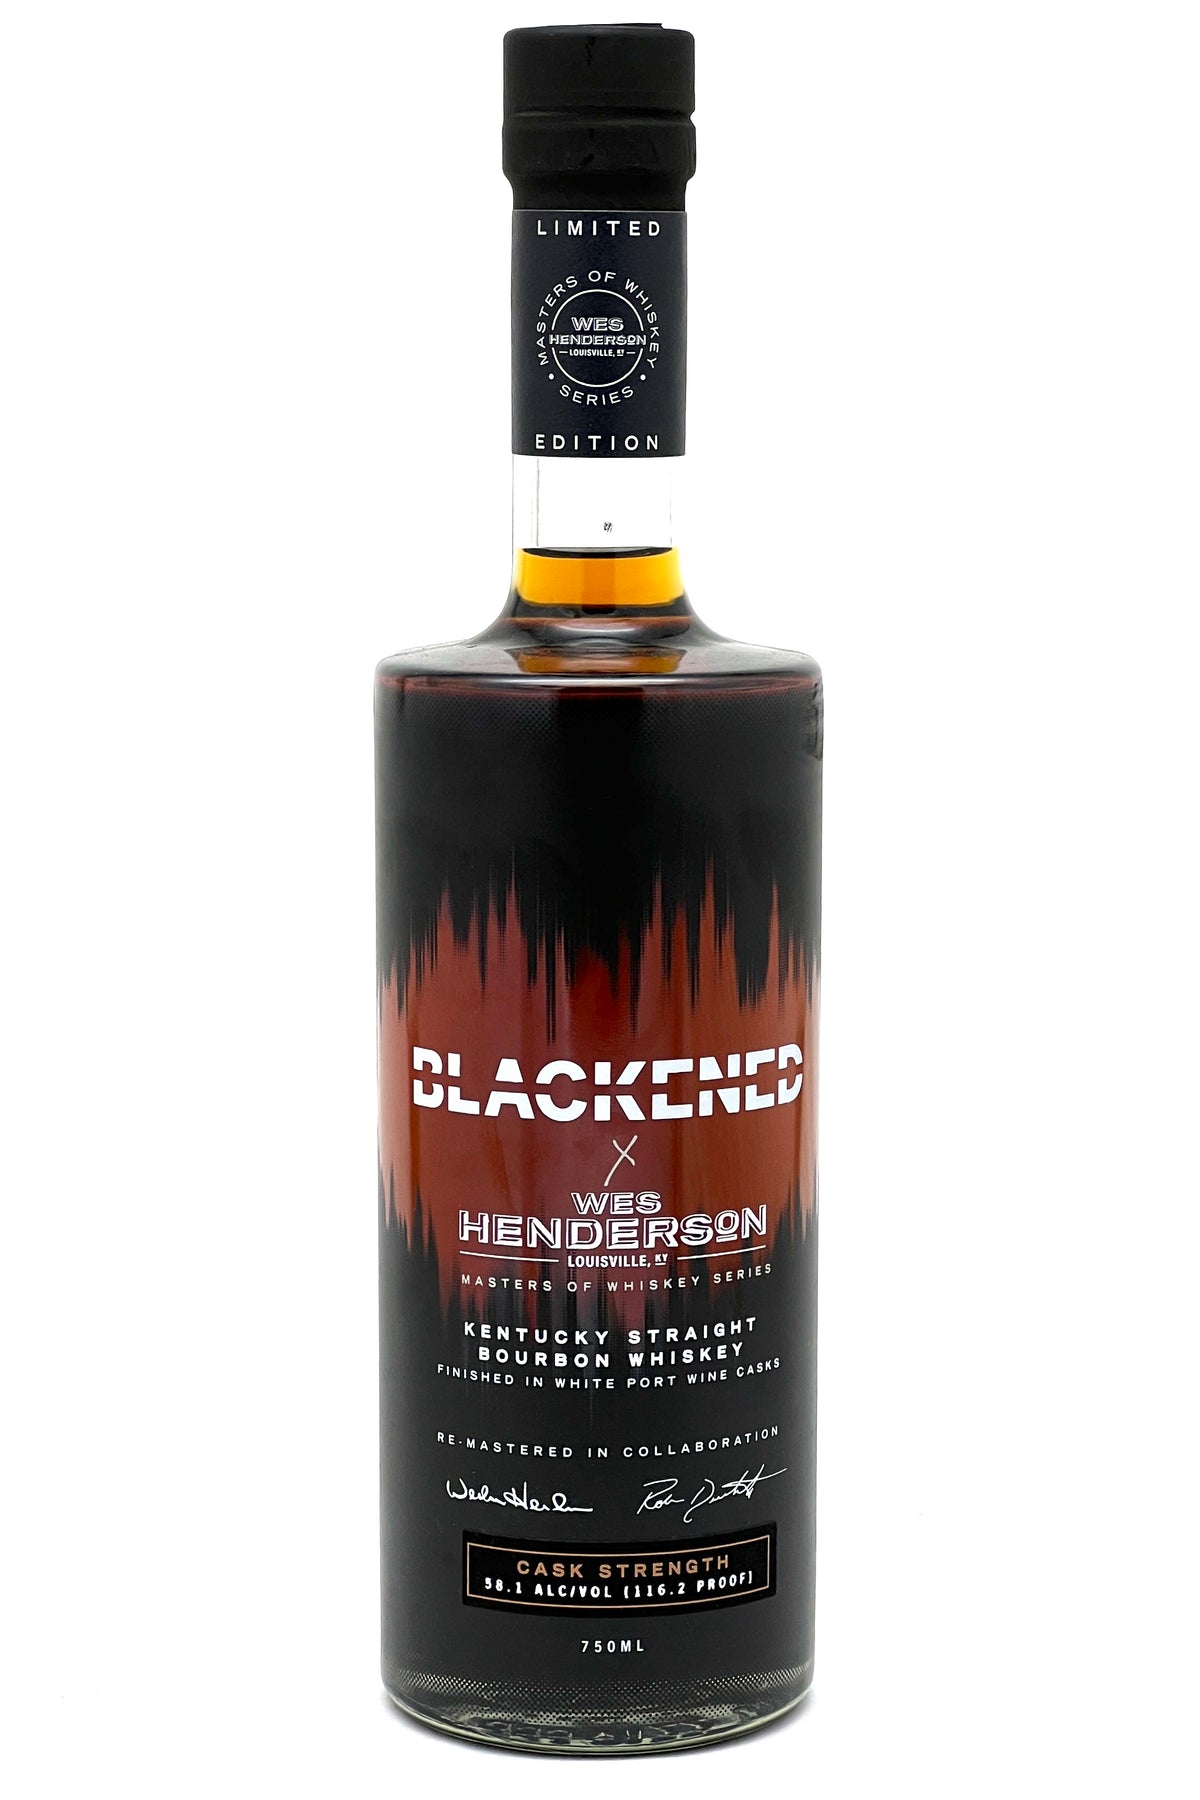 Blackened X Wes Henderson Master of Whiskey Series Bourbon Whiskey